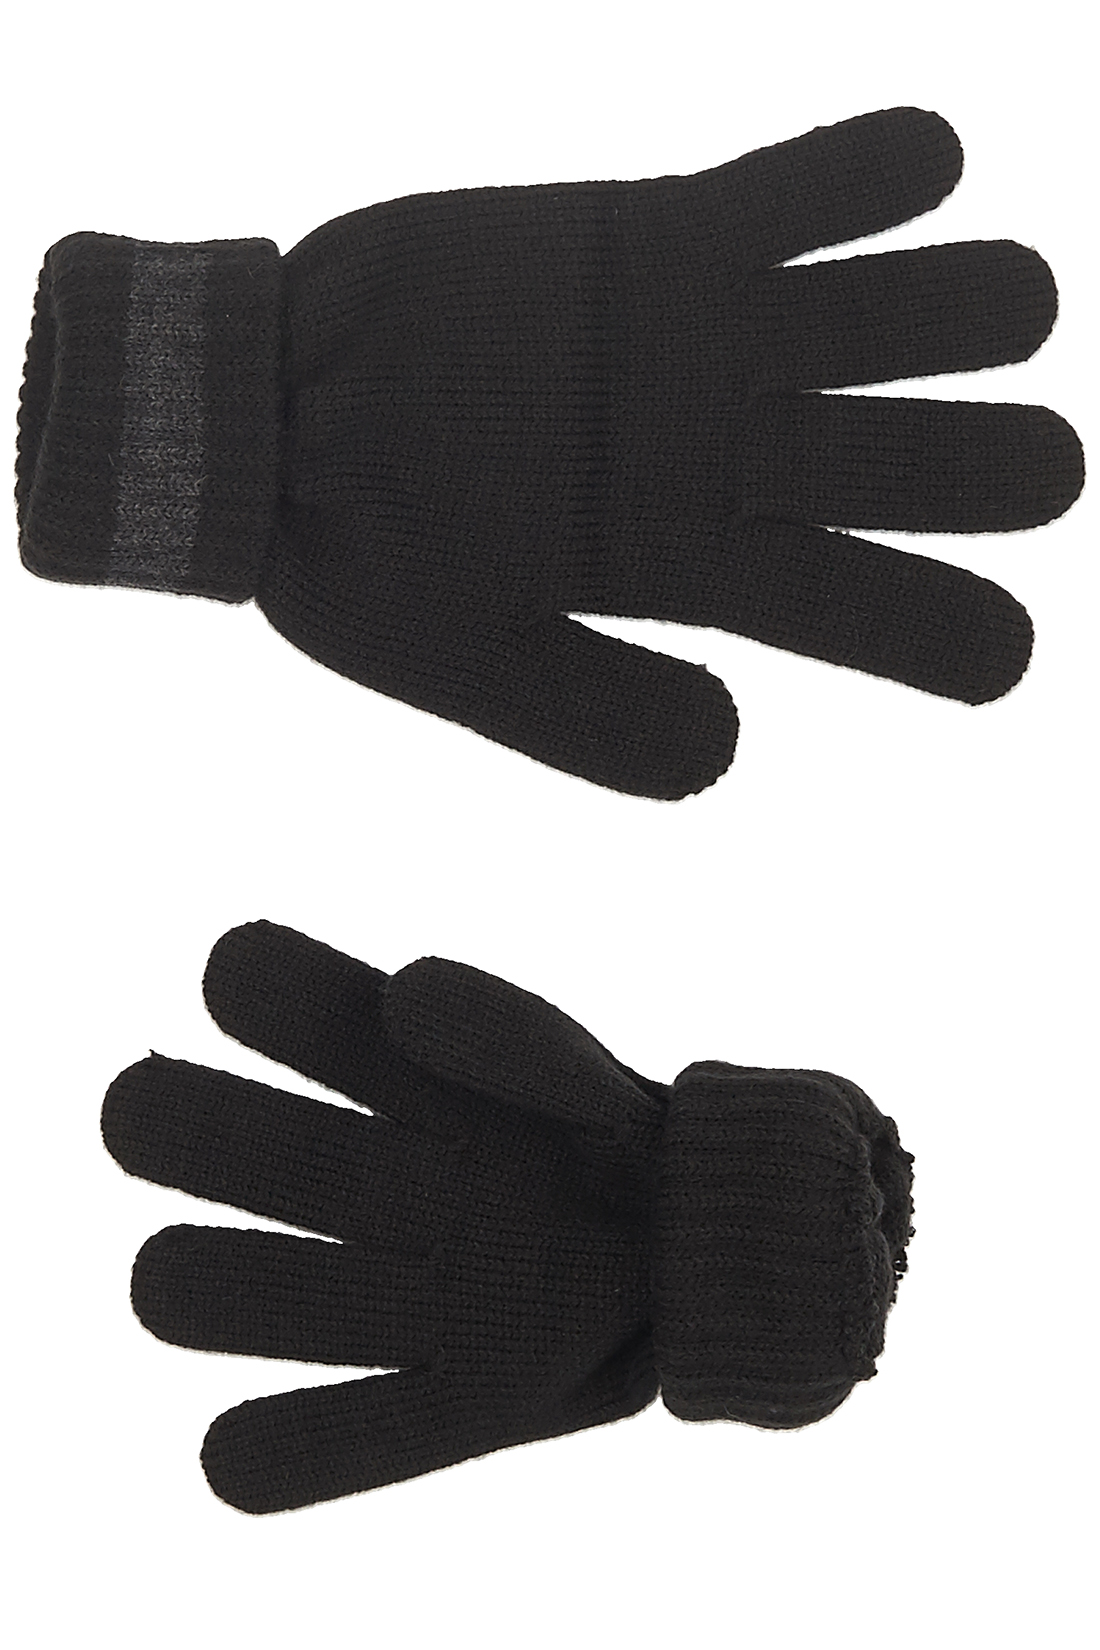 Перчатки с манжетами-отворотами (арт. baon B868502), размер Без/раз, цвет черный Перчатки с манжетами-отворотами (арт. baon B868502) - фото 3